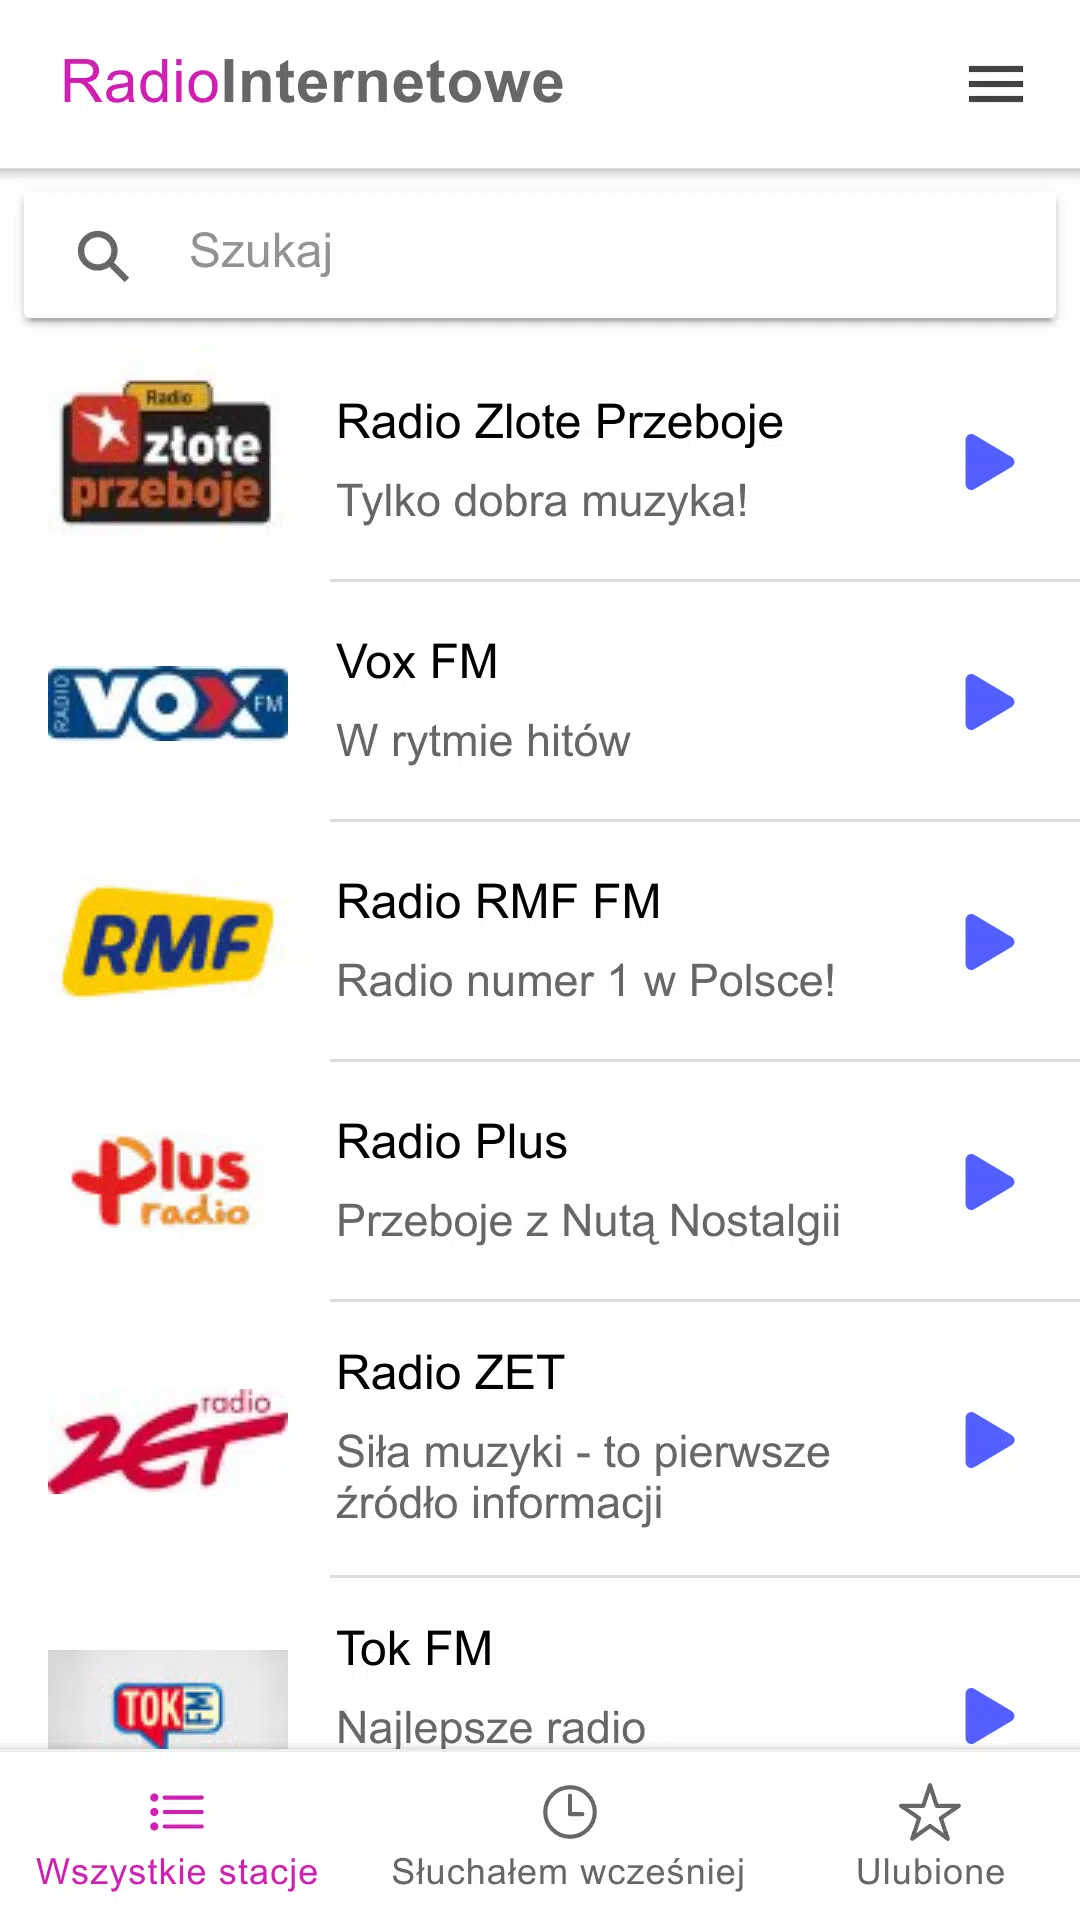 Polskie radio internetowe for Android - APK Download